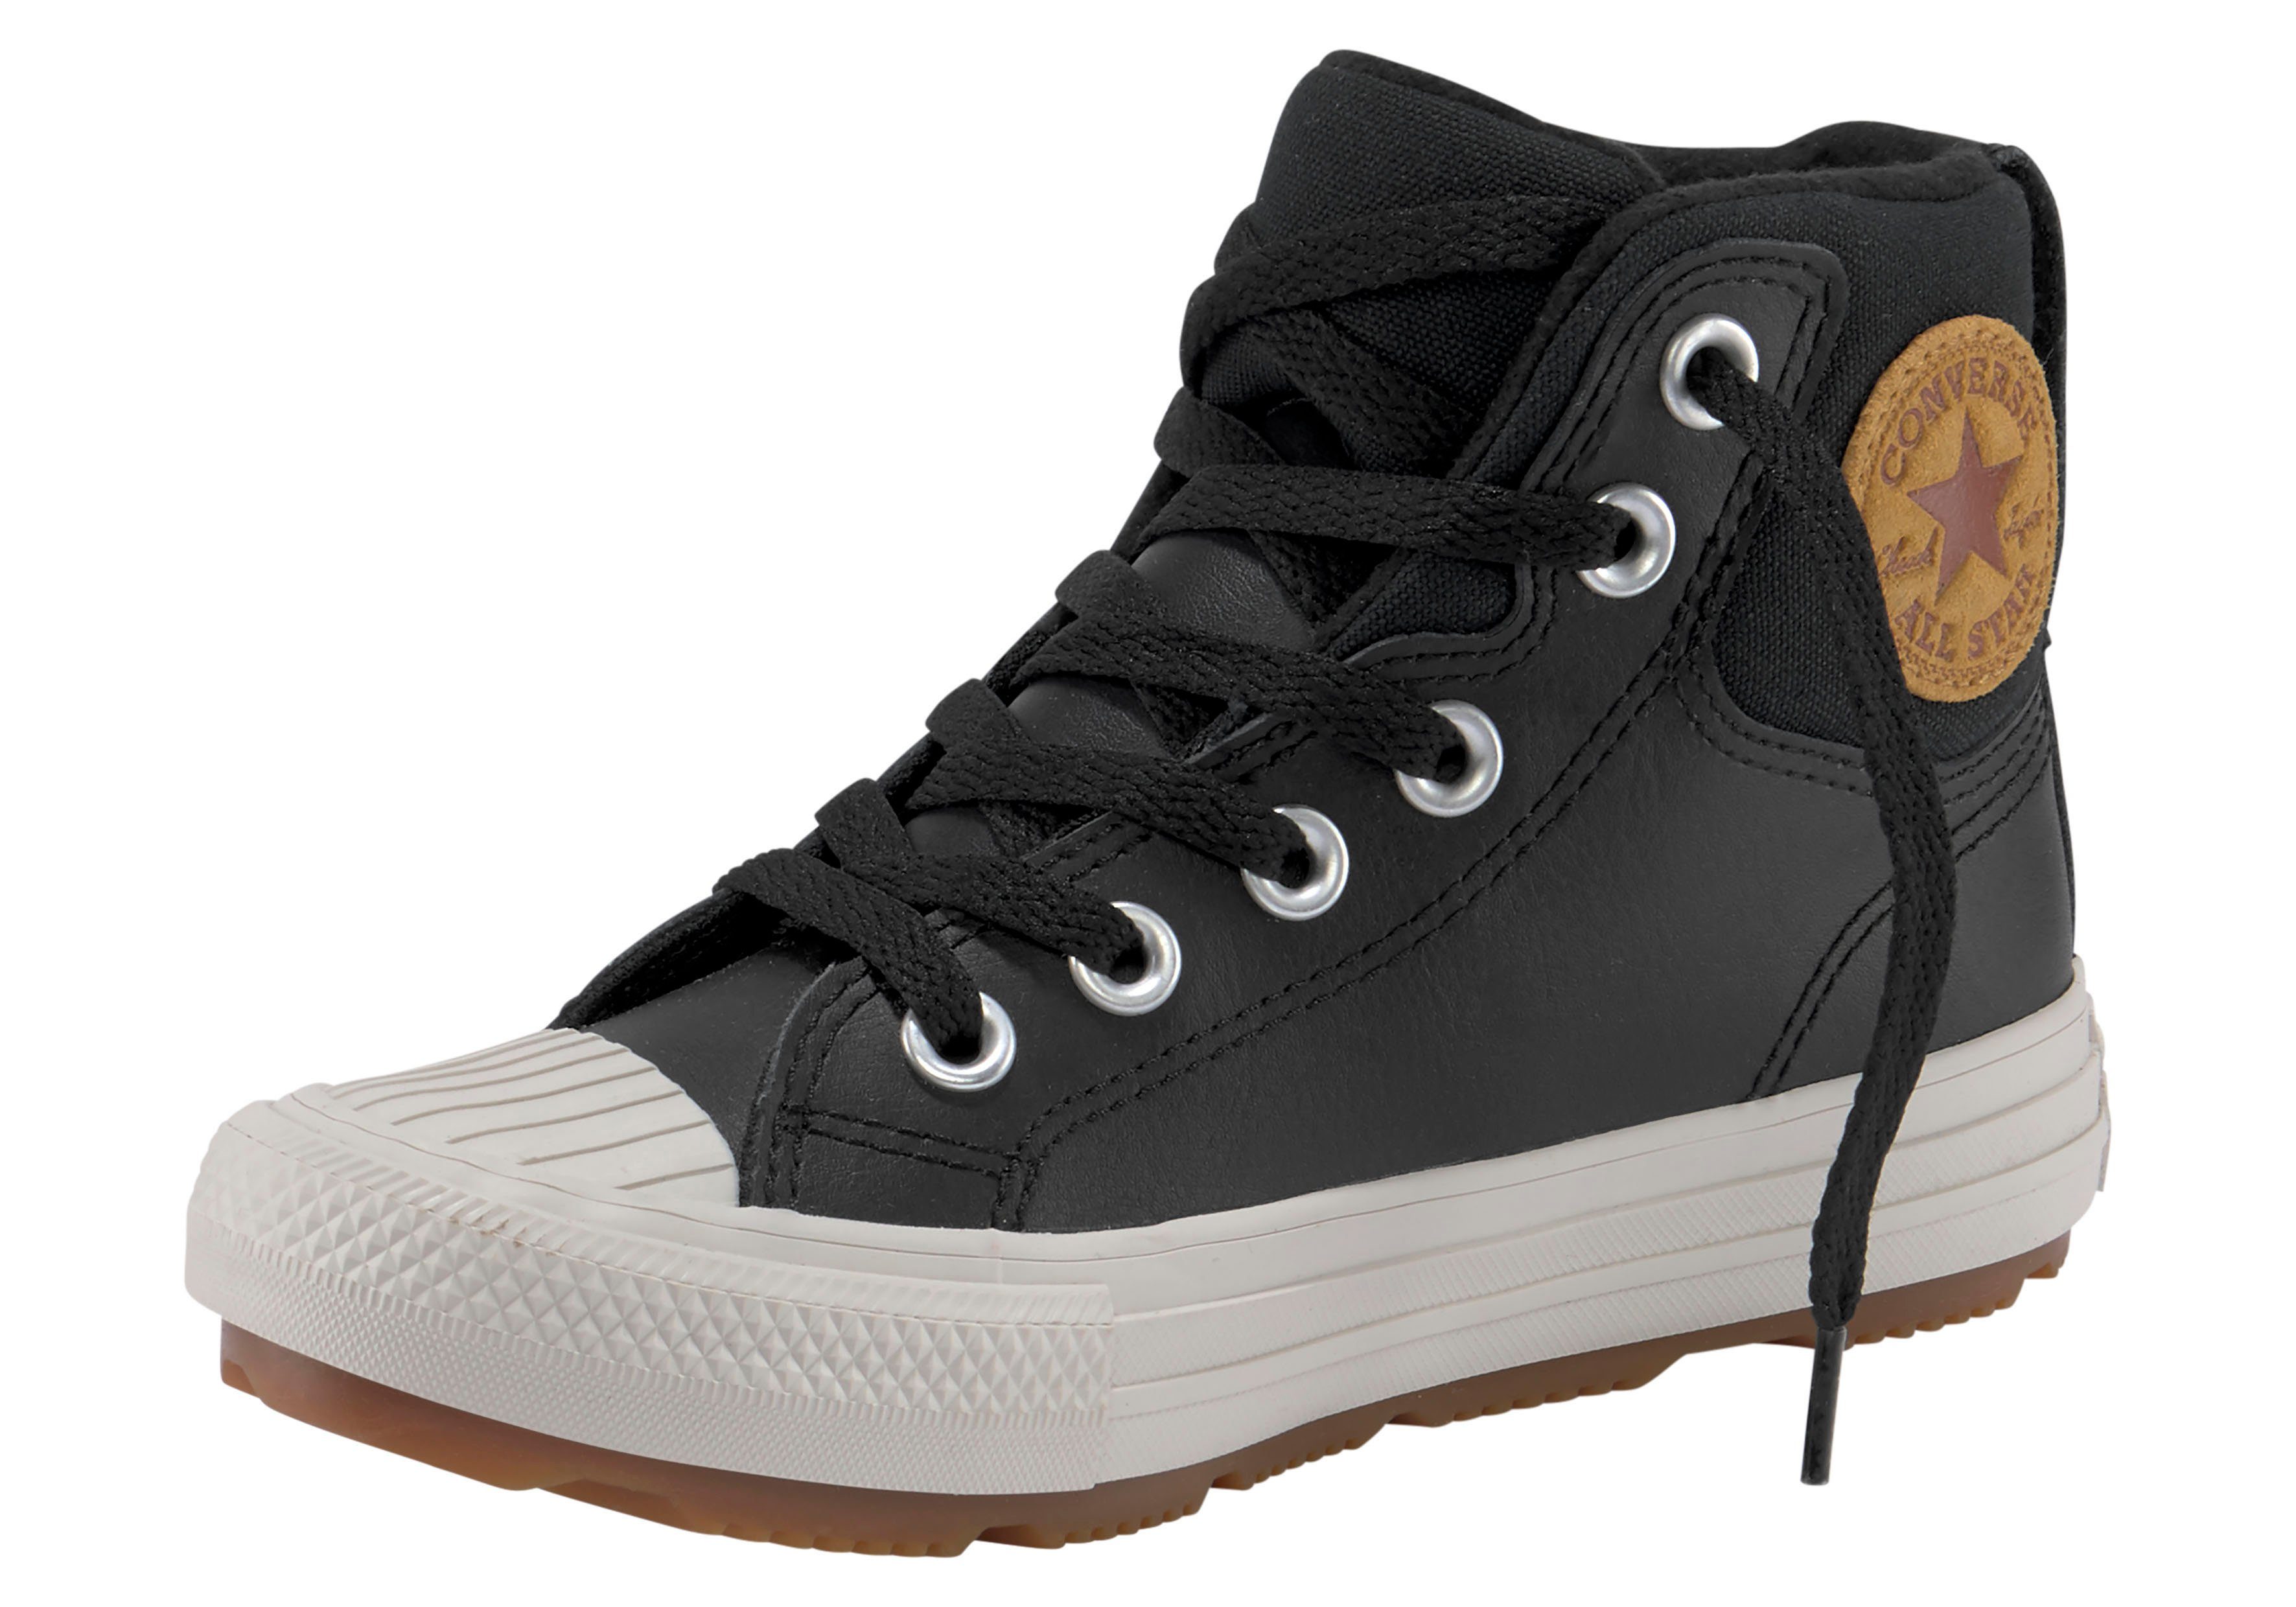 Converse »CHUCK TAYLOR ALL STAR BERKSHIRE BOO« Sneaker online kaufen | OTTO